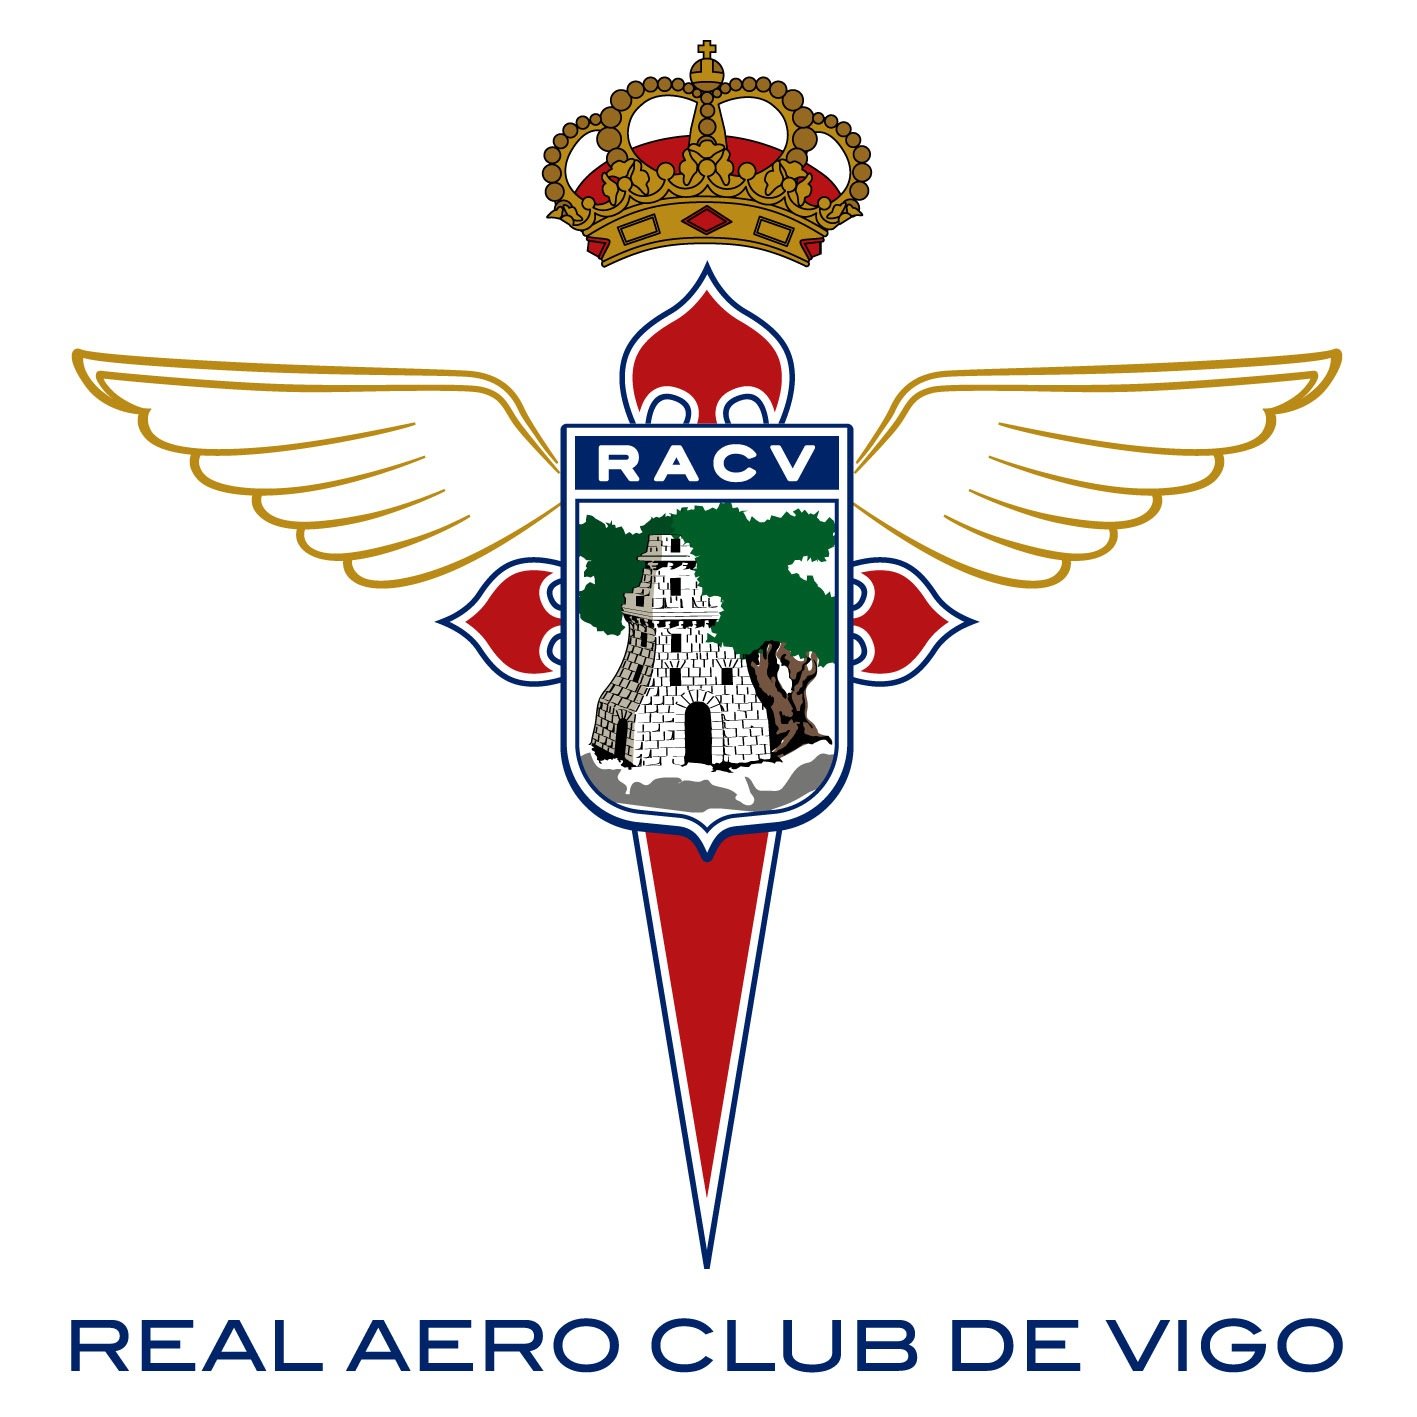 REAL AERO CLUB DE VIGO